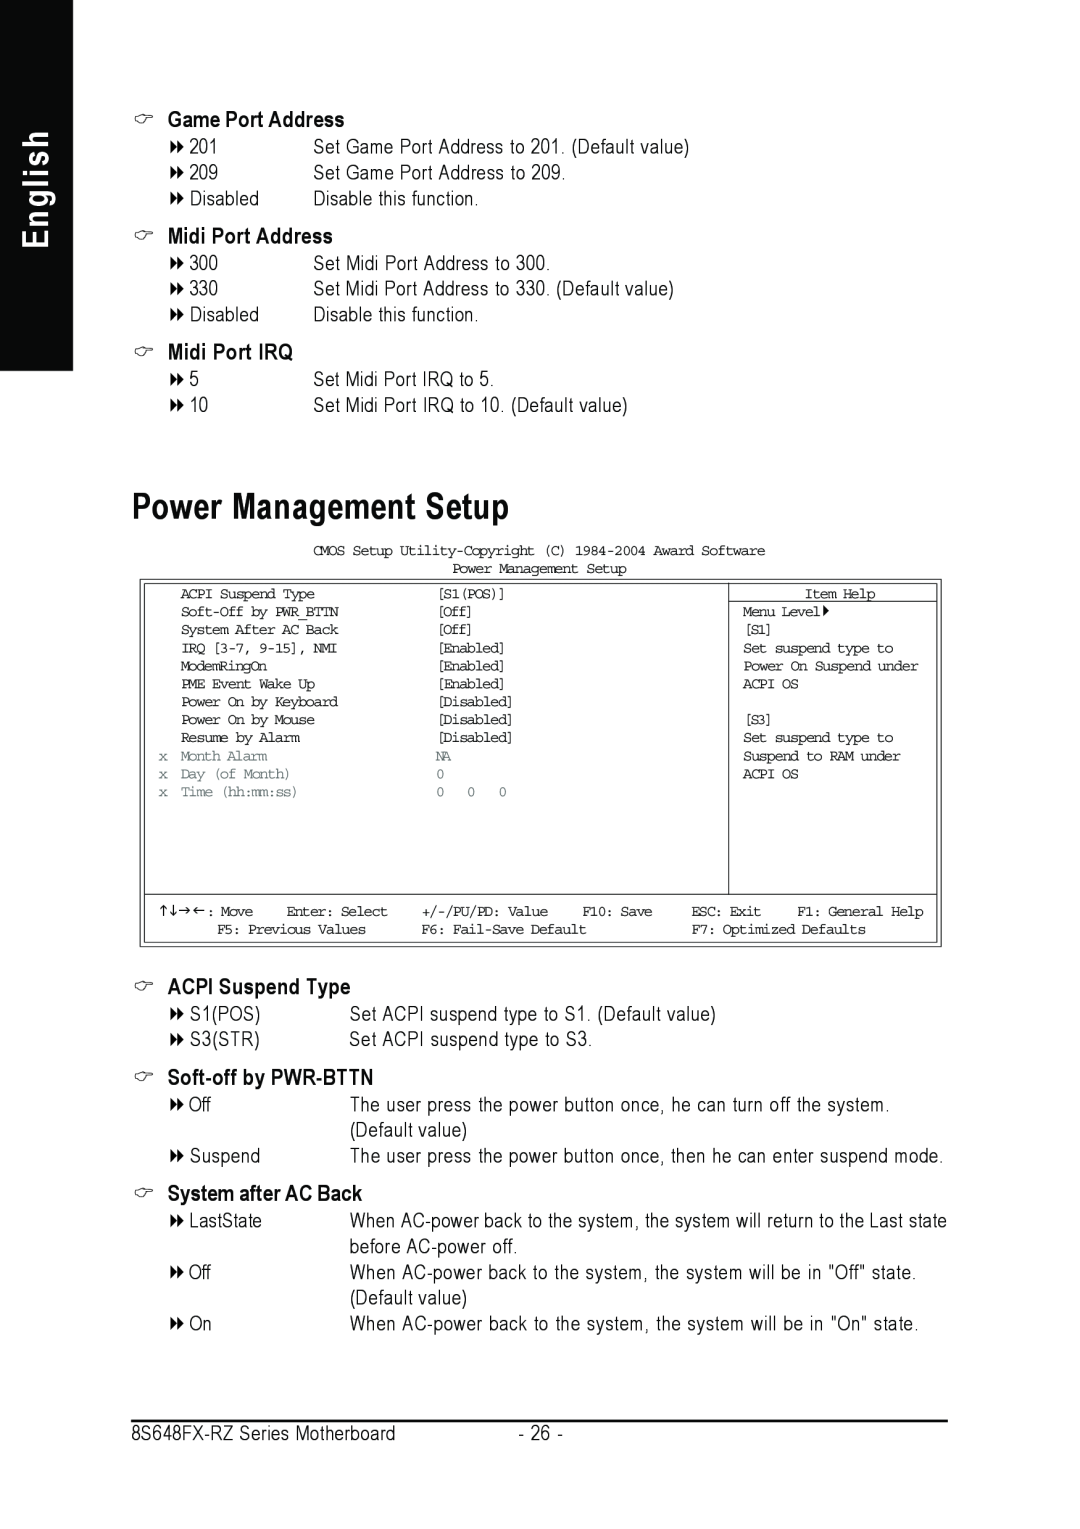 Gigabyte 8S648FX-RZ-C user manual Power Management Setup, English, Game Port Address, Midi Port Address, Midi Port IRQ 